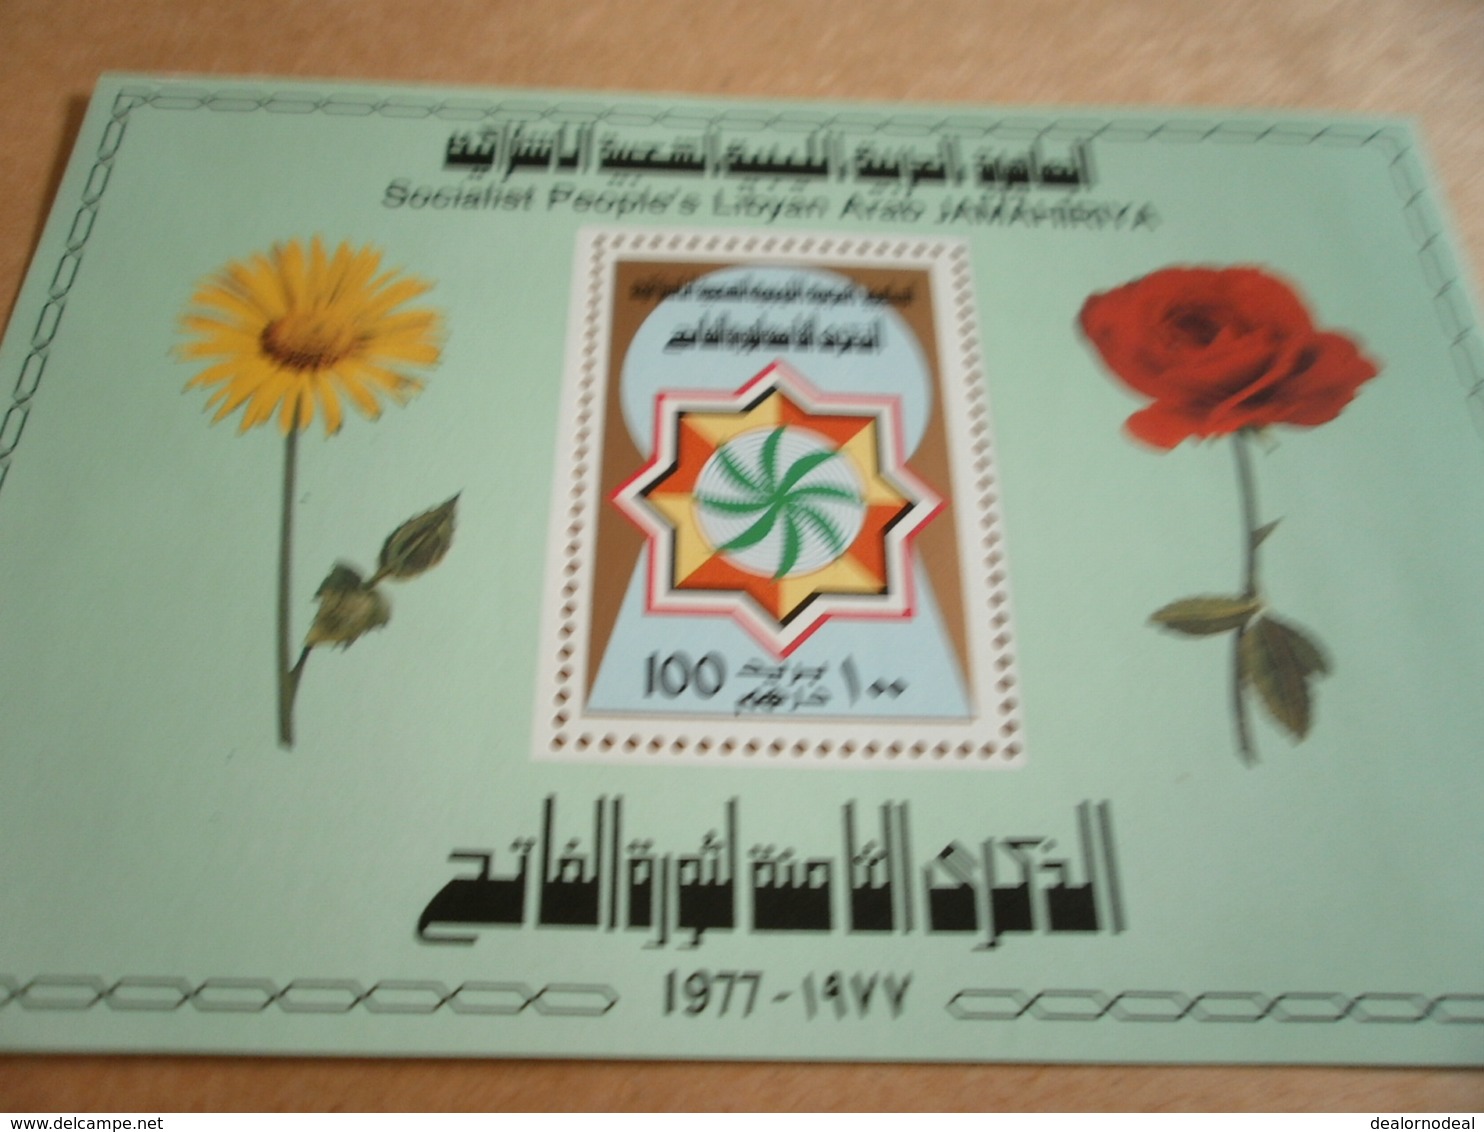 Miniature Sheets Libya 8th Anniversary Of Revolution - Libya